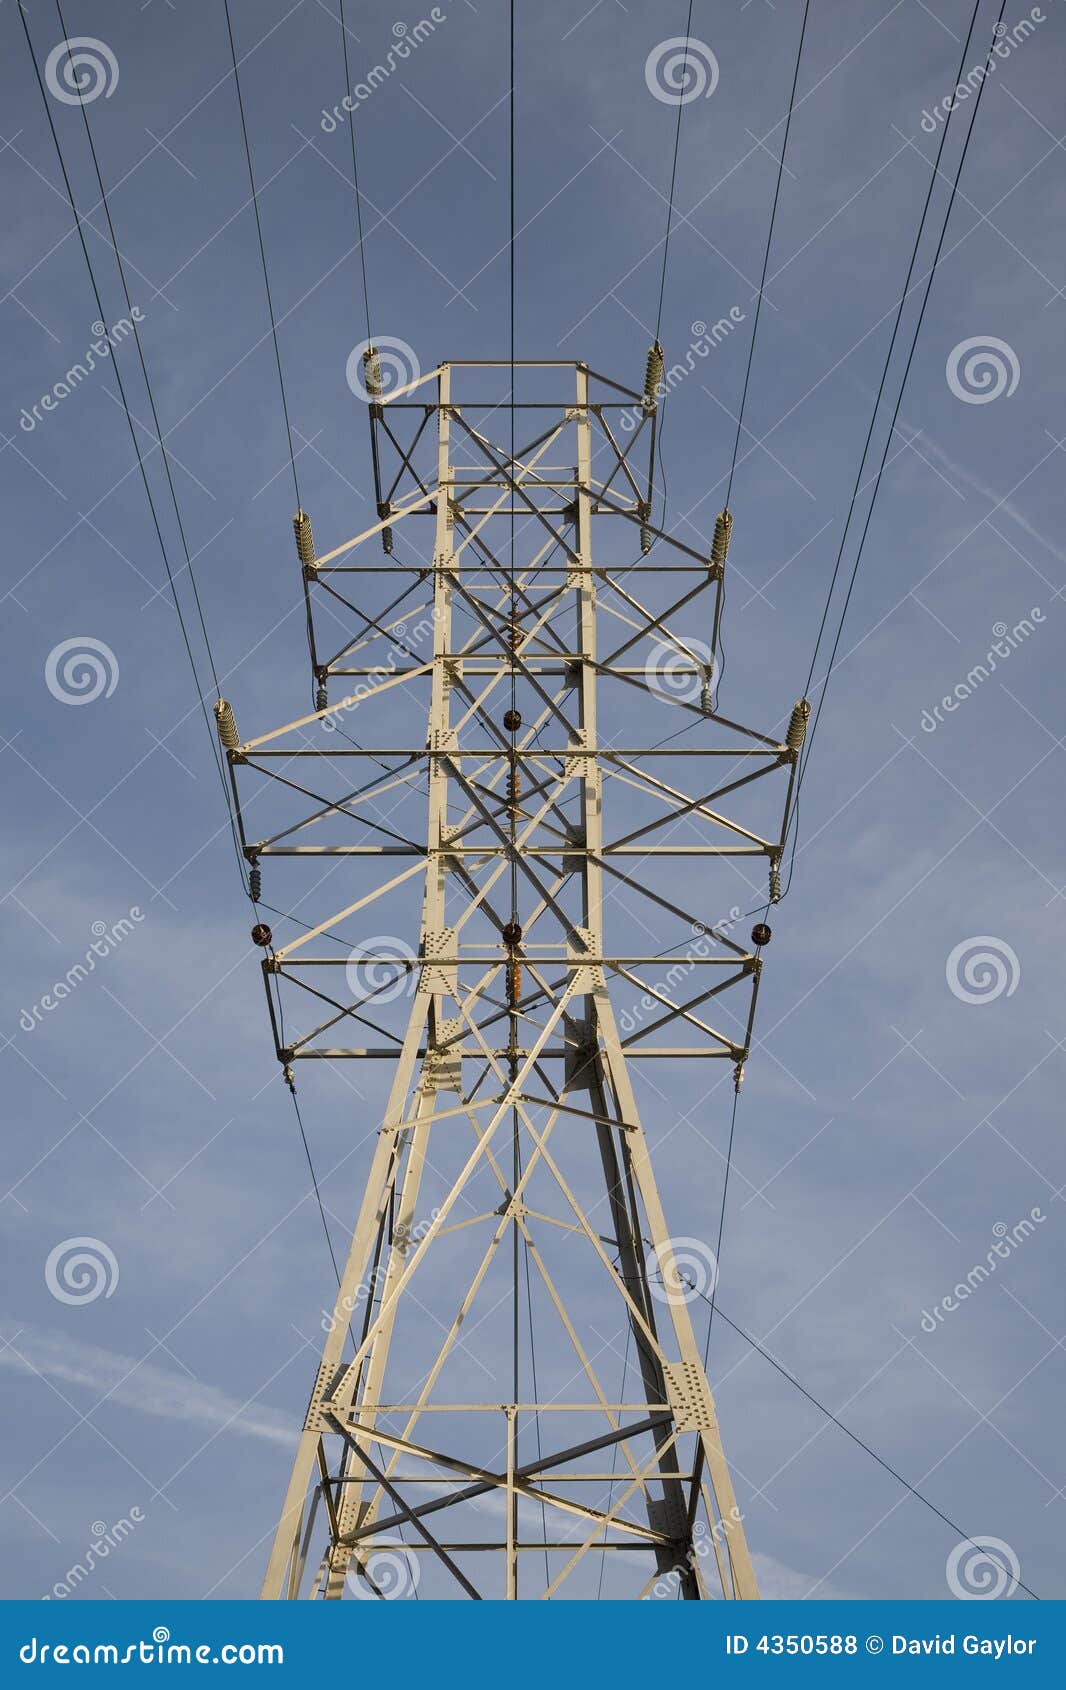 power tower clip art - photo #45